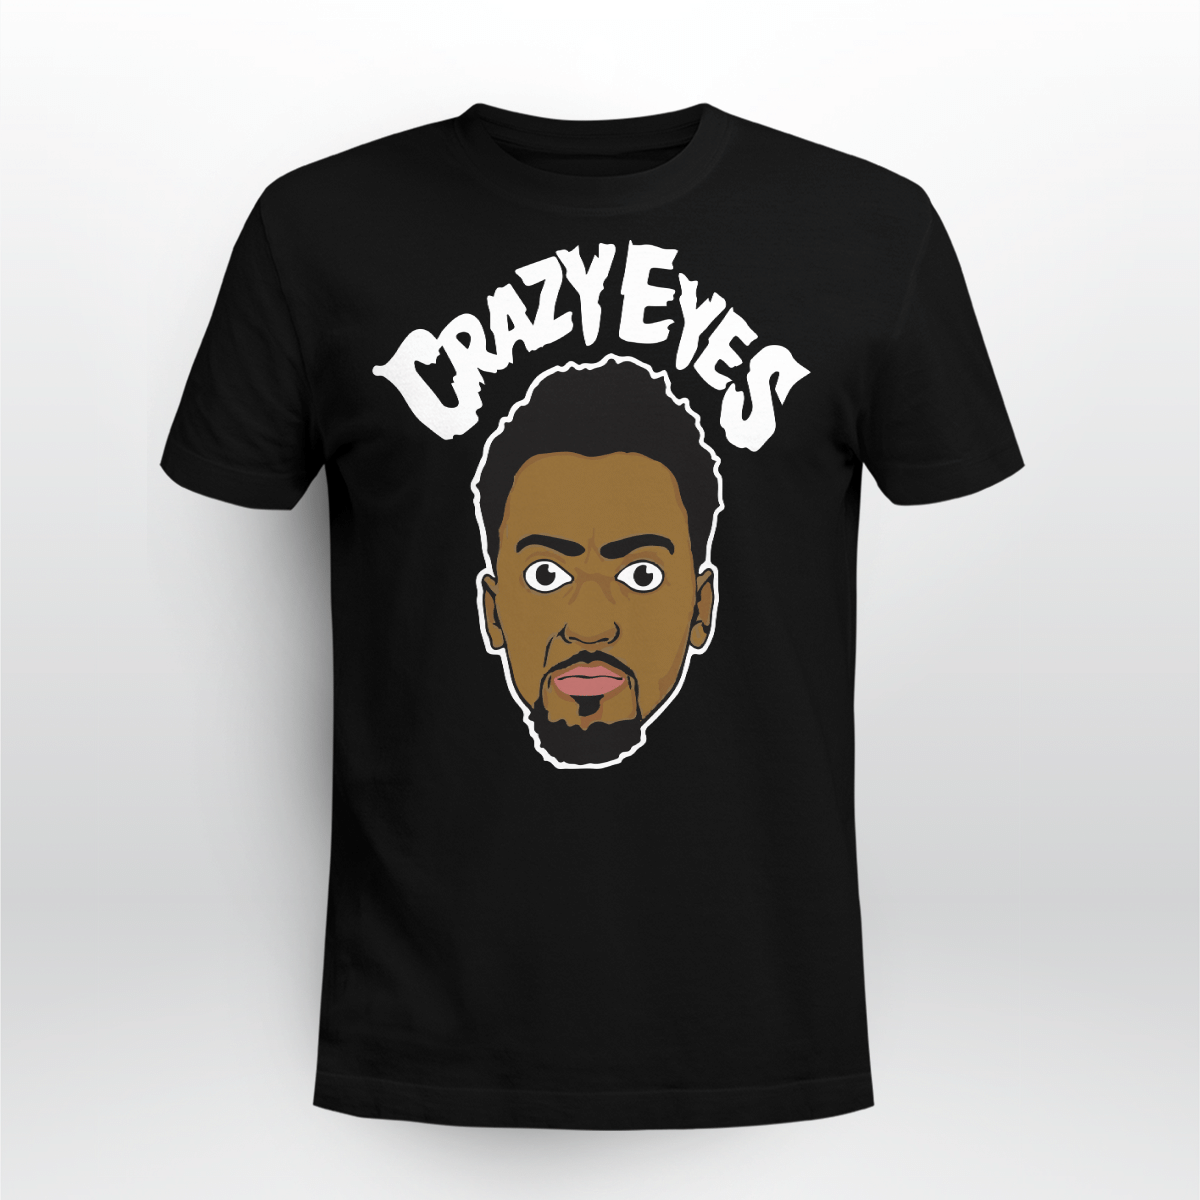 Bobby portis crazy eyes shirt Style: Unisex T-shirt, Color: Black